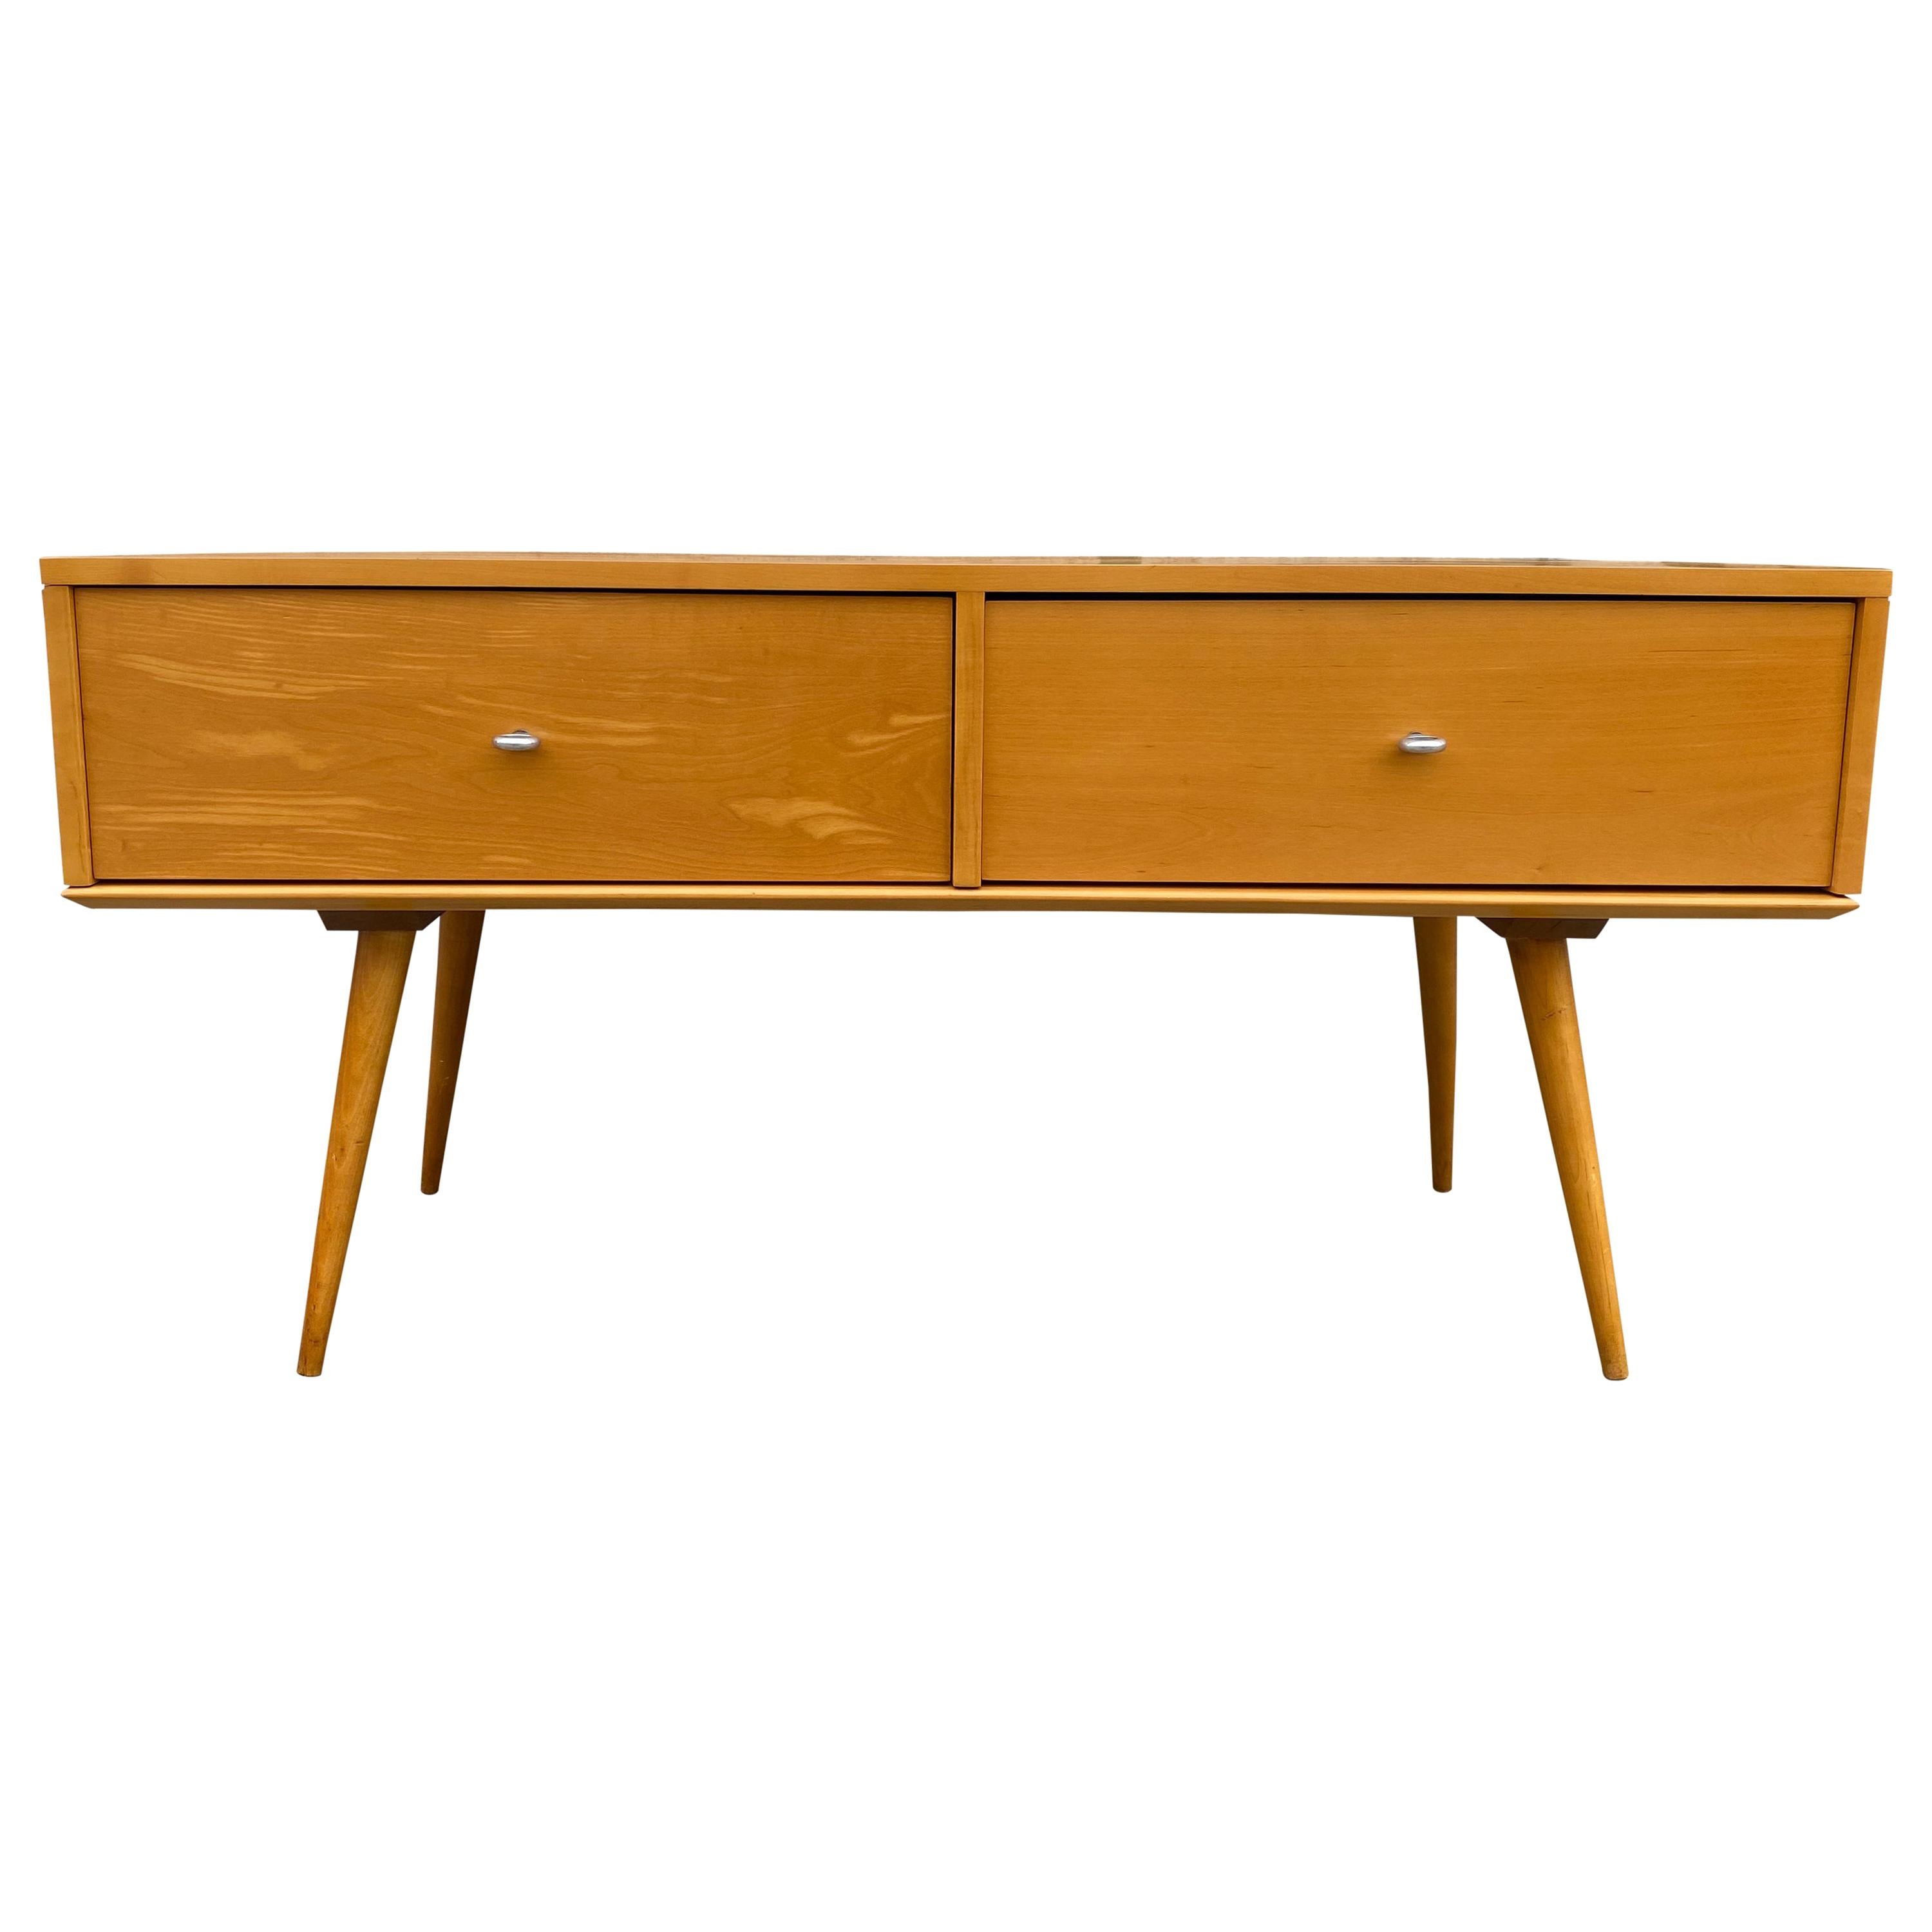 Rare Midcentury Modern Low Two-Drawer Dresser by Paul McCobb Blonde